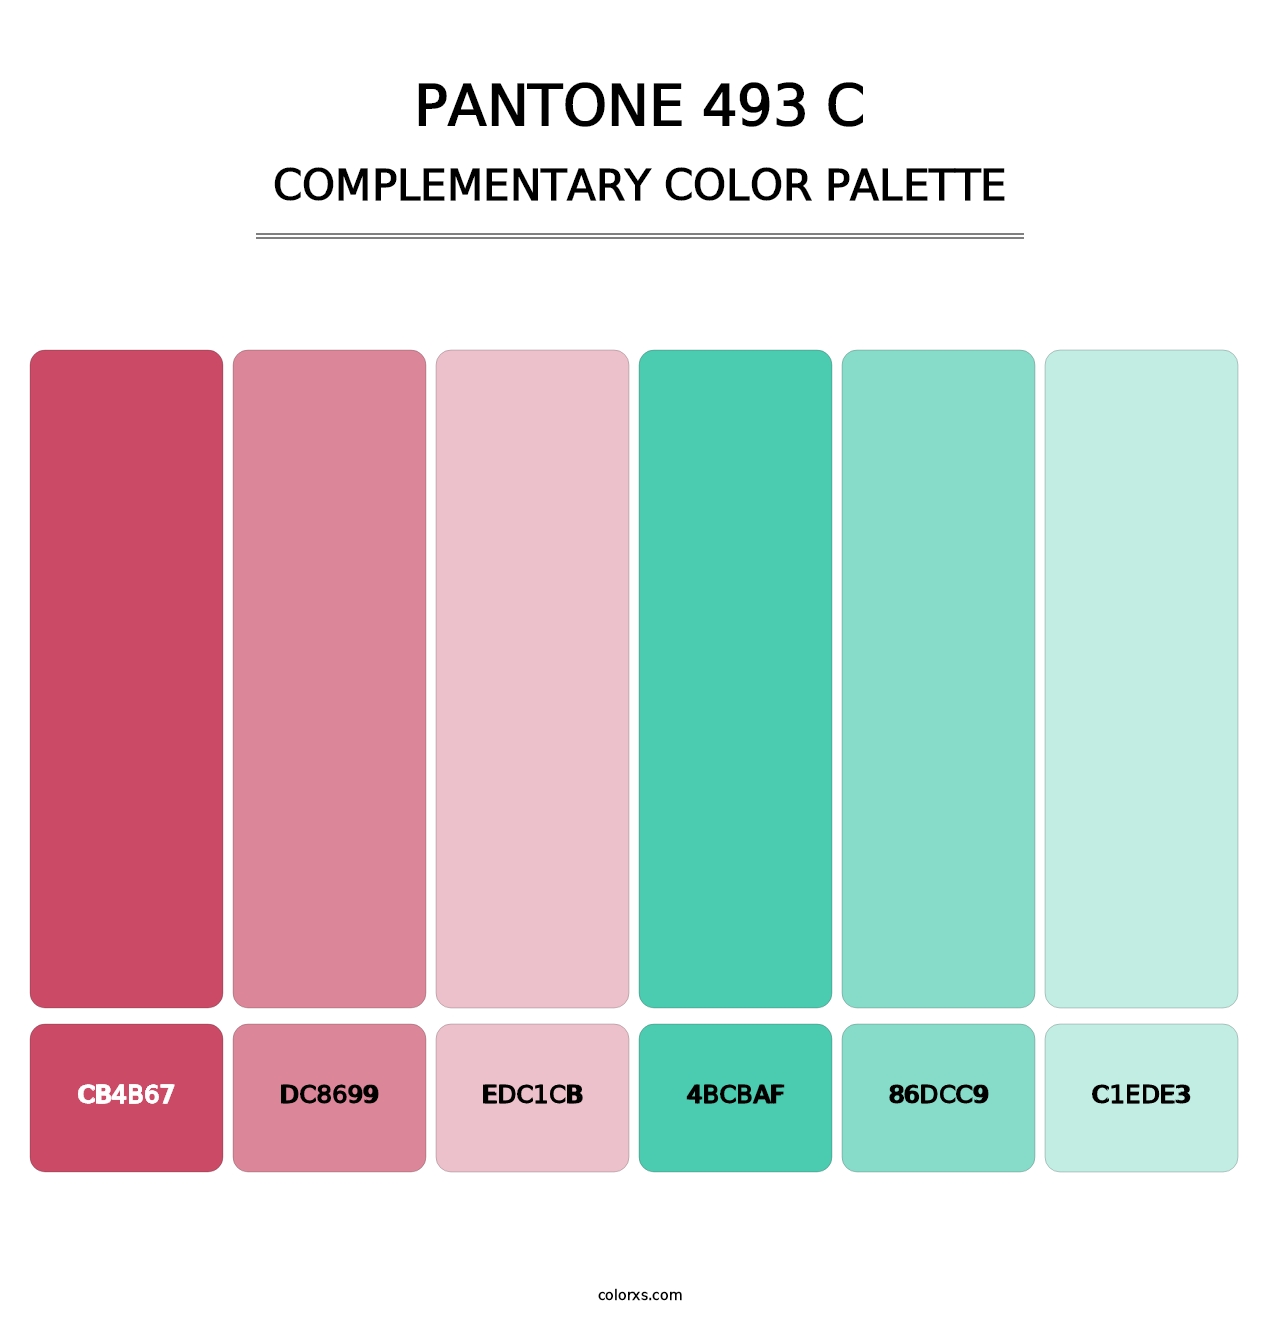 PANTONE 493 C - Complementary Color Palette